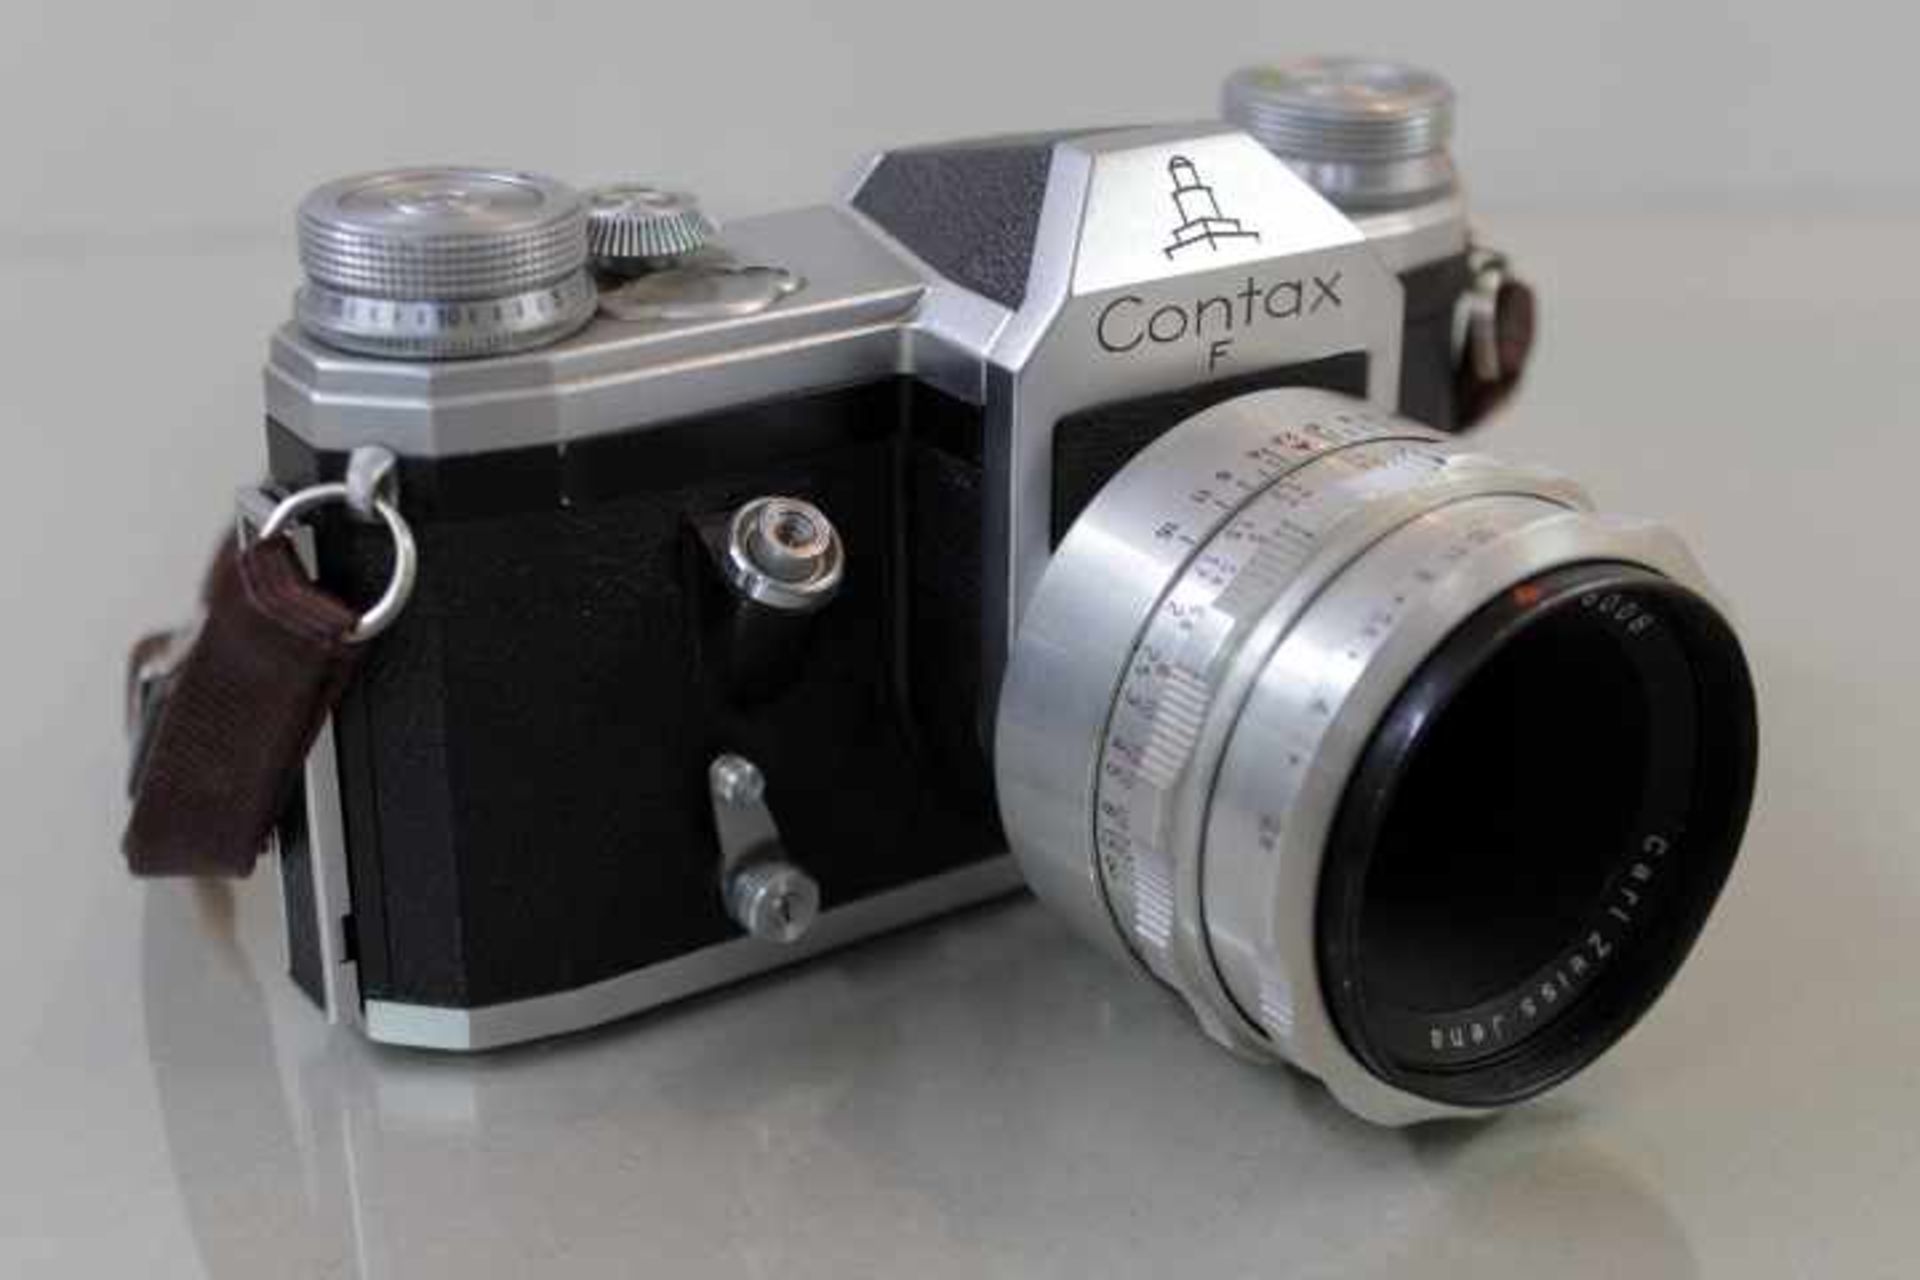 Contax F Spiegelreflex KameraObjektiv Carl Zeiss JenaTessar 2,8 / 50mmFunktion nicht geprüft- - -